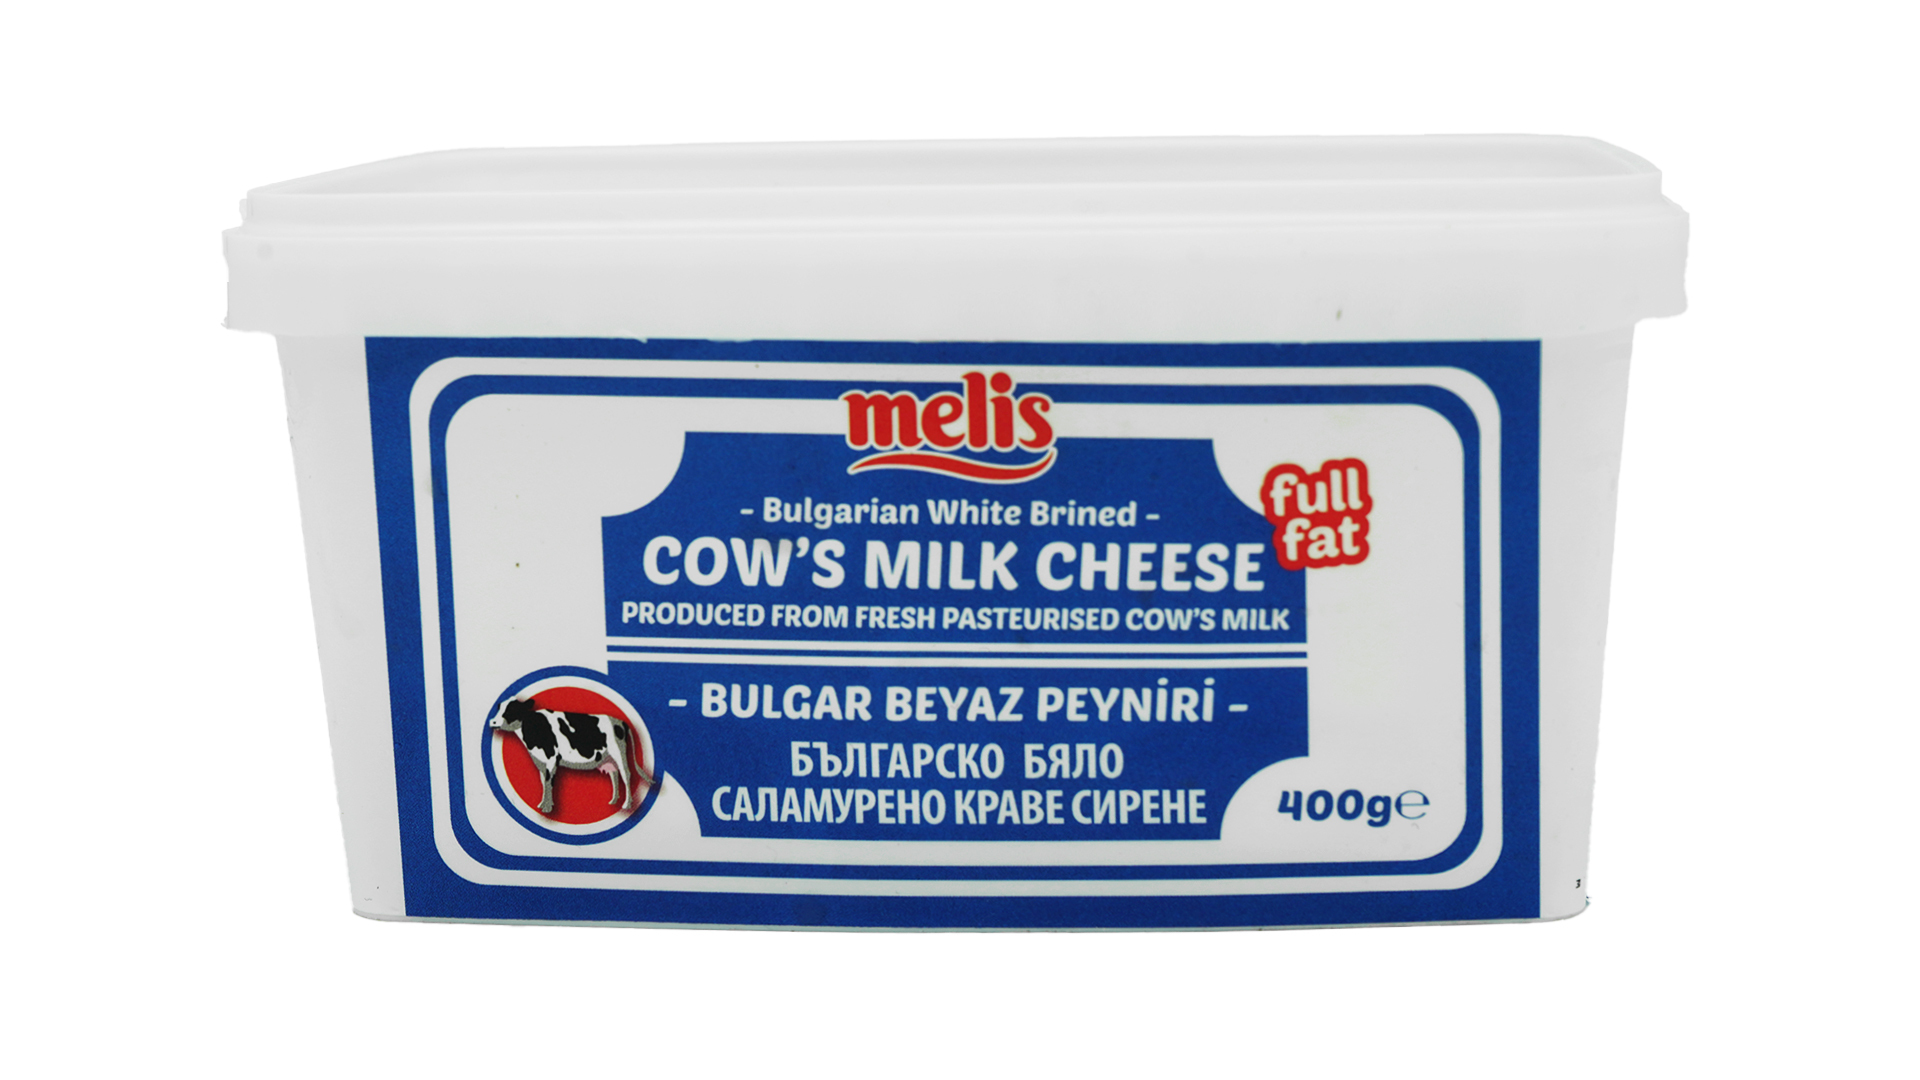 Melis bulgarian cows milk cheese 400g 4